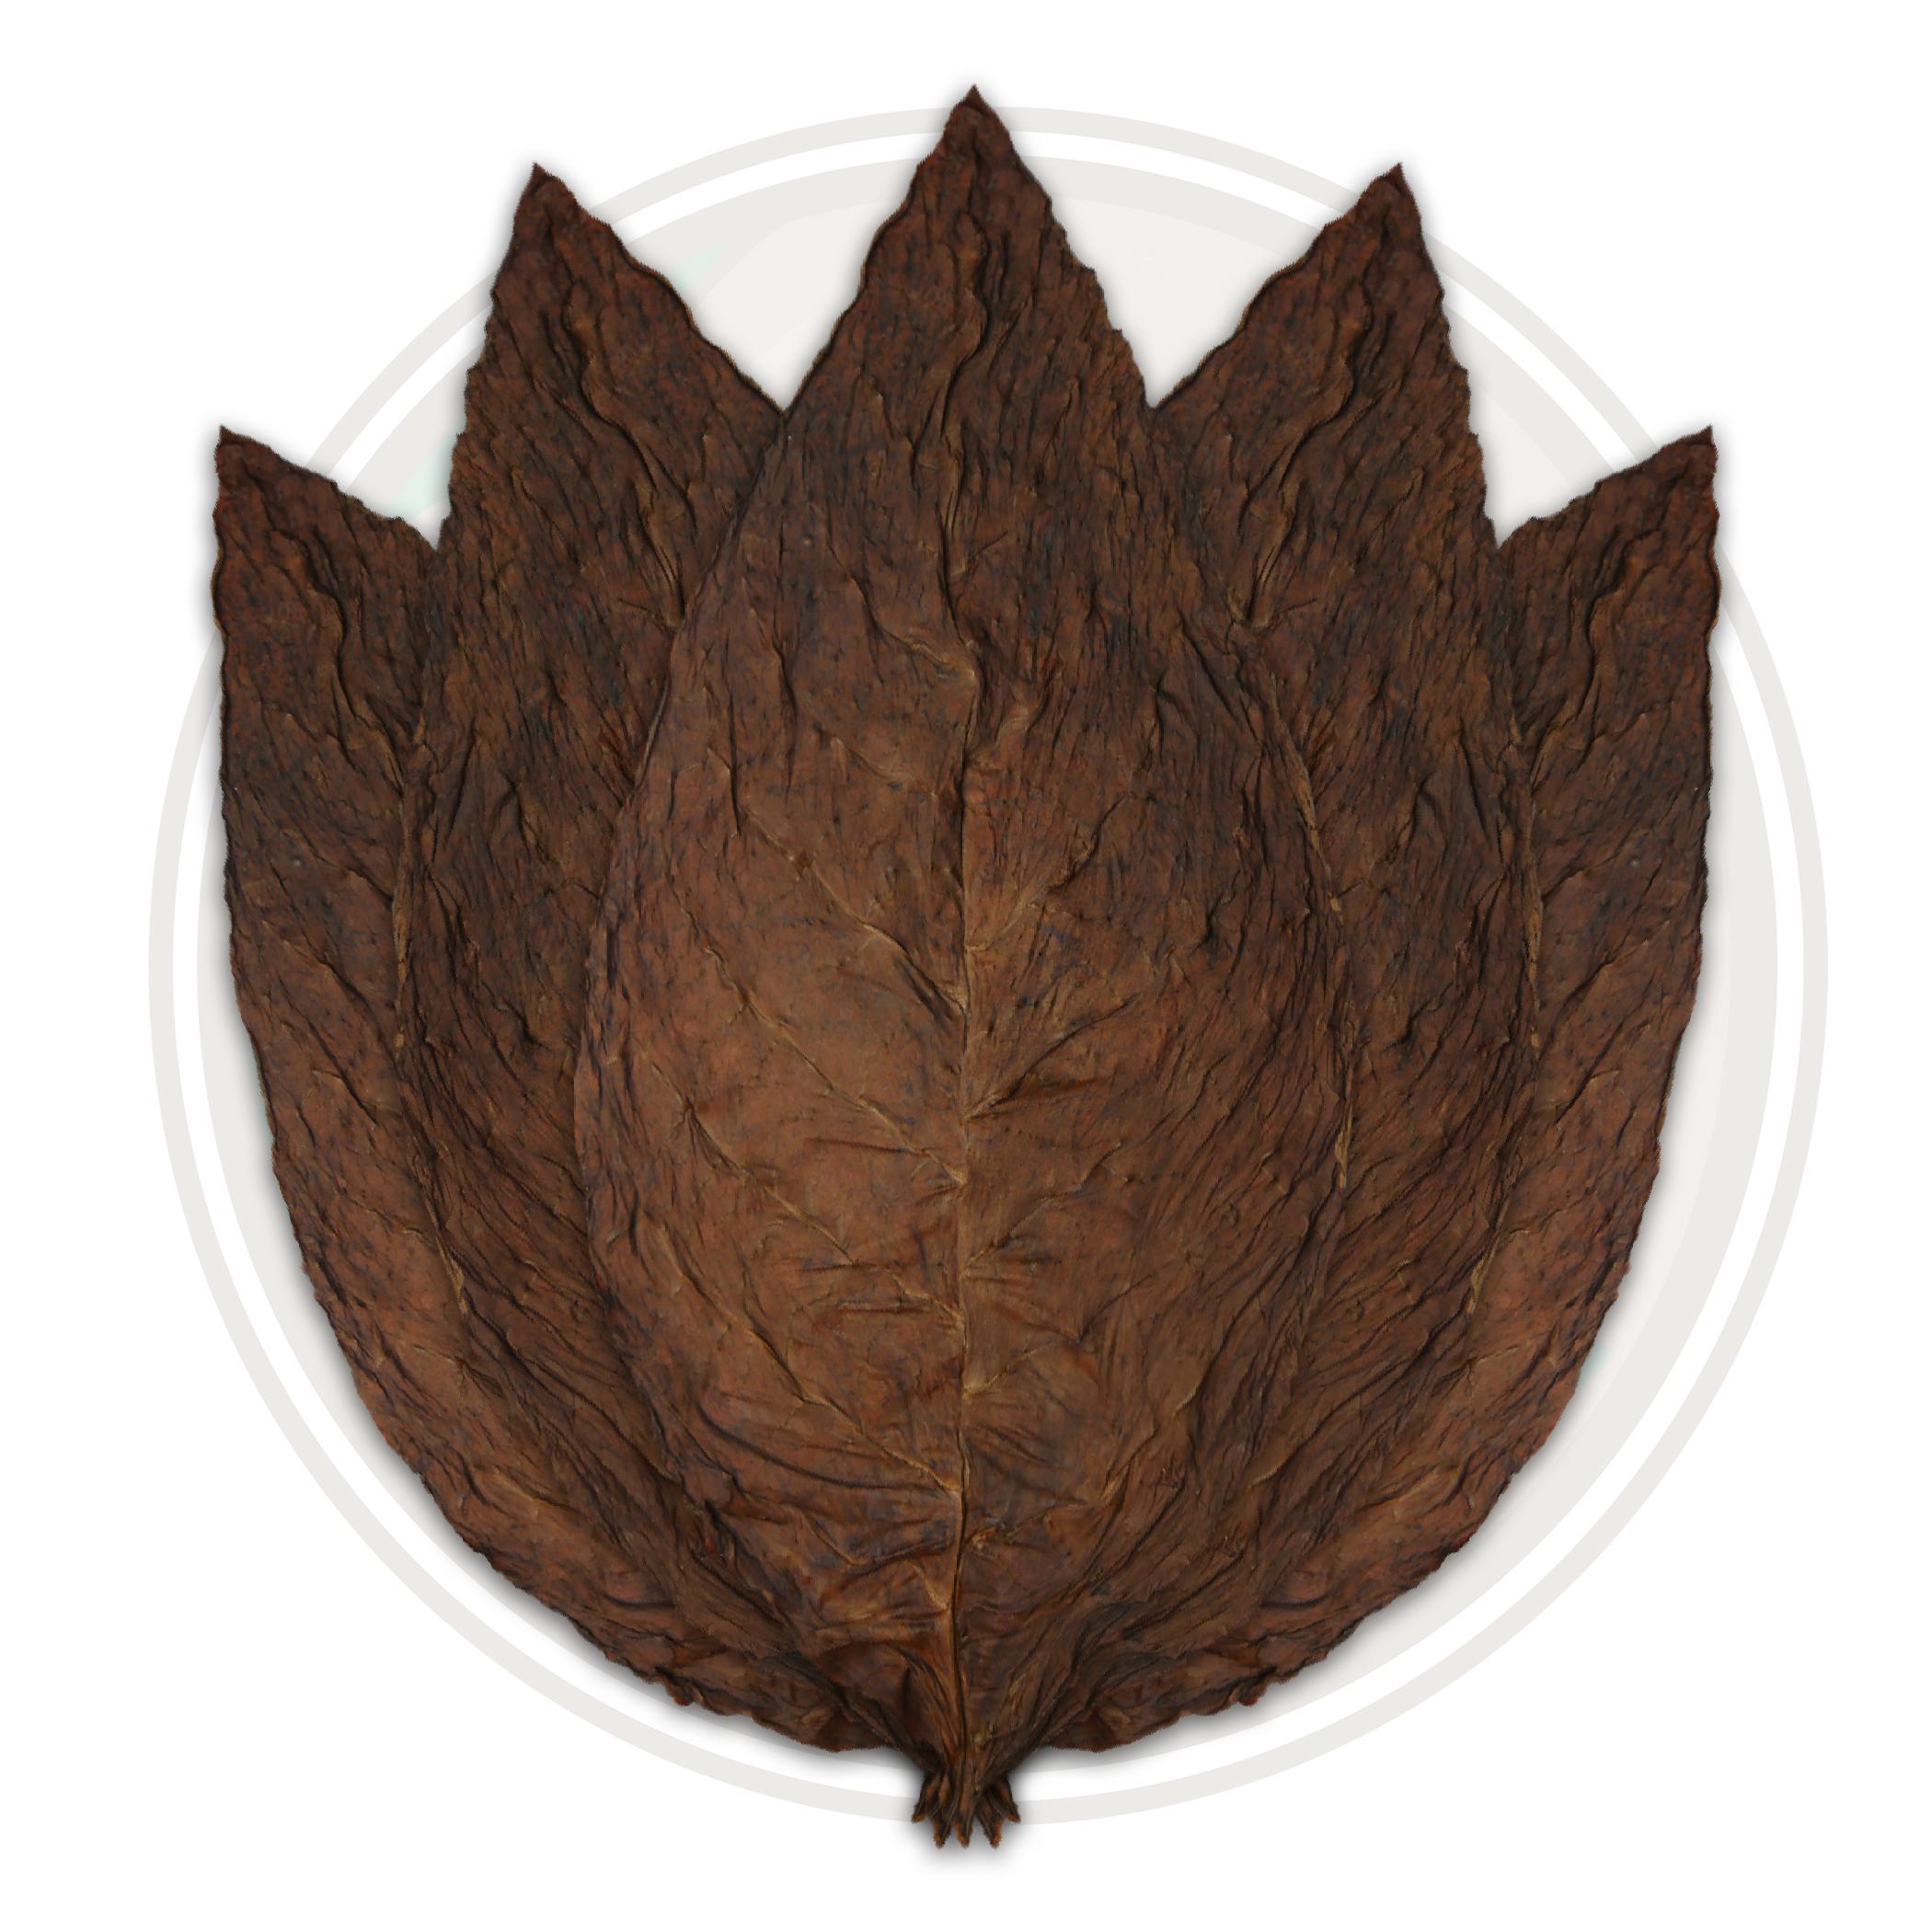 CT Connecticut Broadleaf Fronto Wrapper Whole Tobacco Leaf